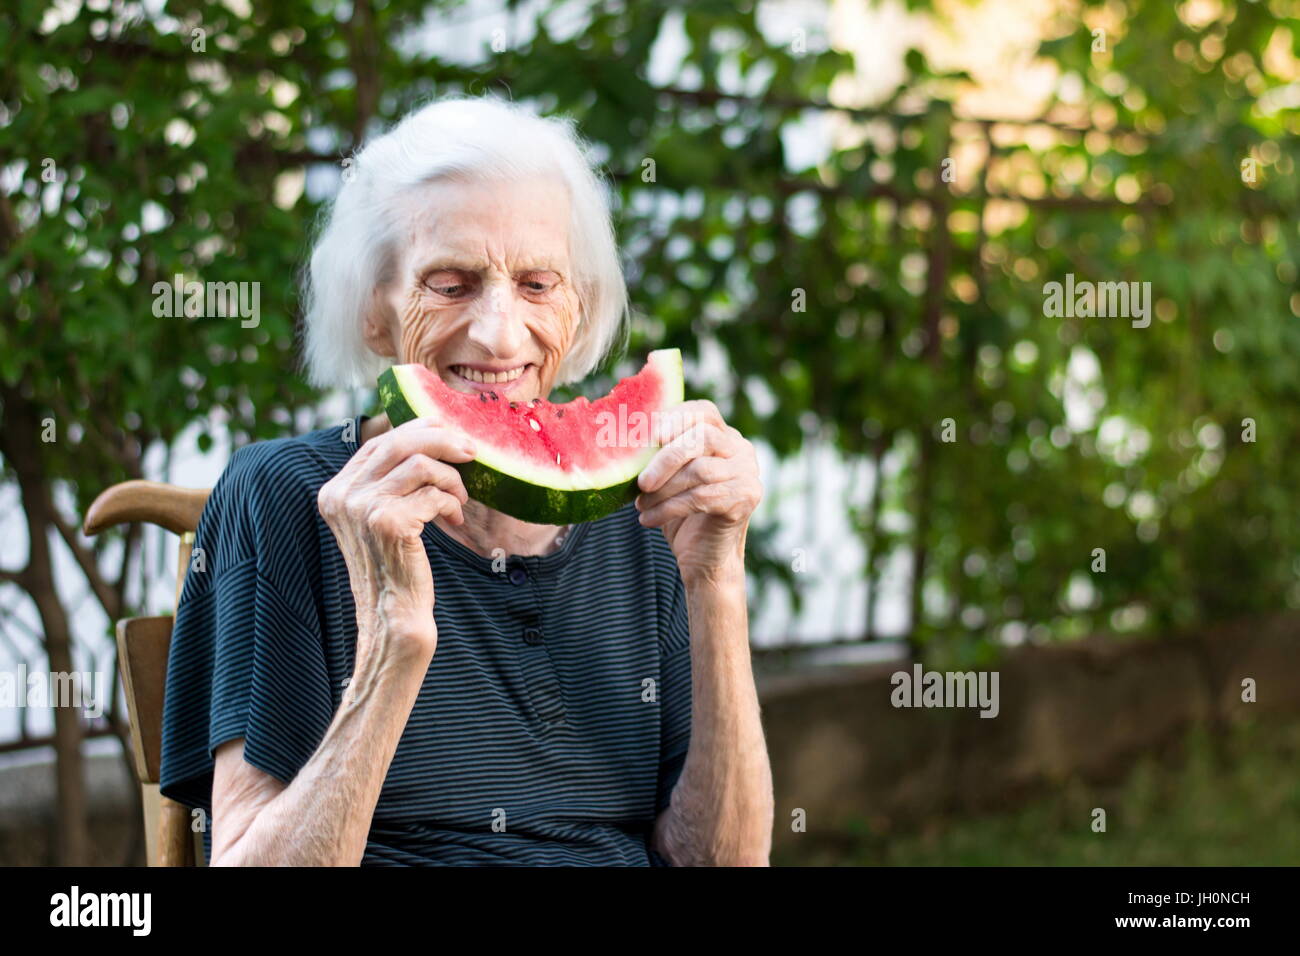 Cheerful grandma eating watermelon fruit in the backyard Stock Photo